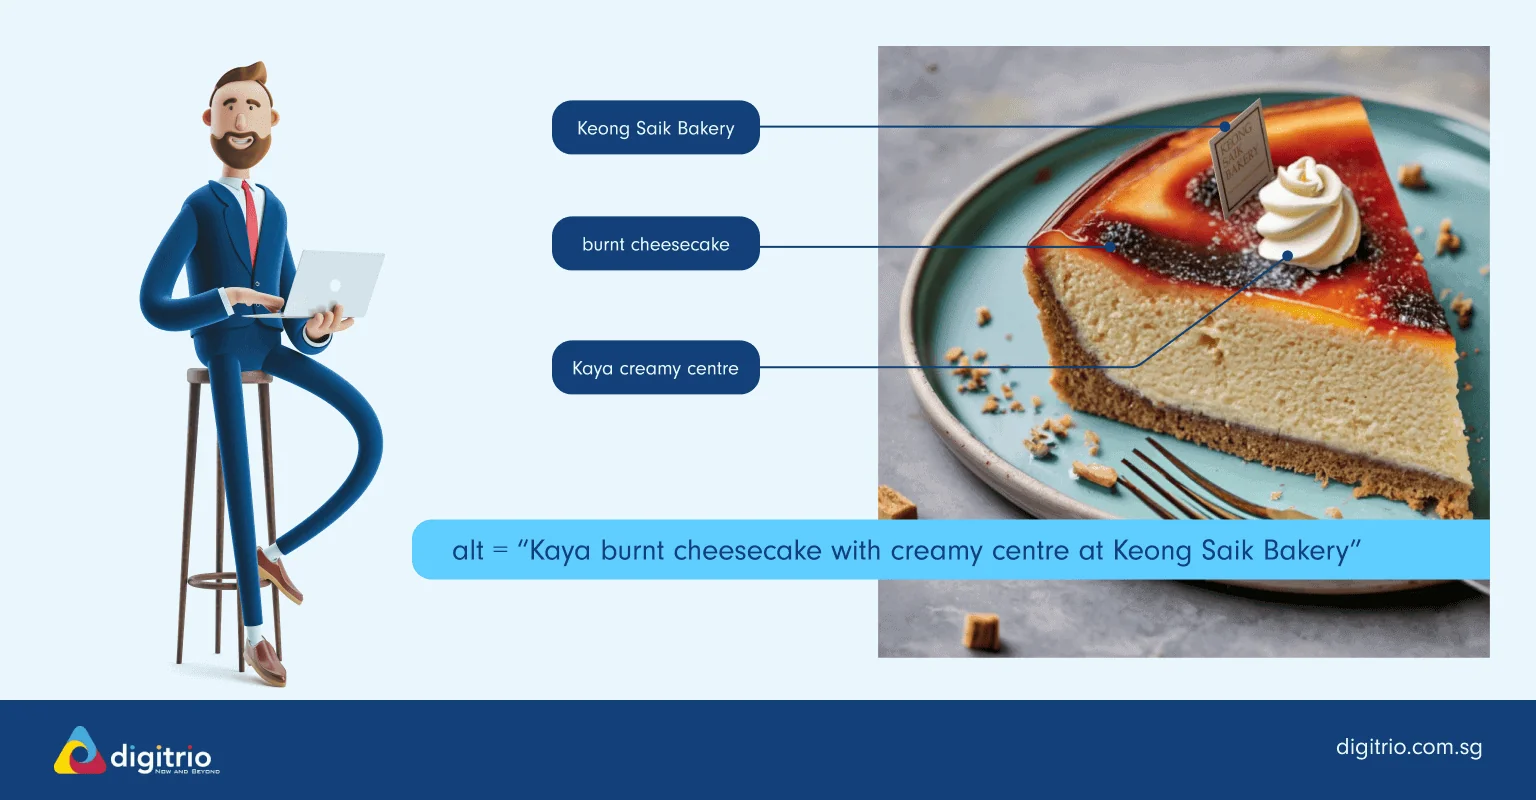 Alt text example of "Kaya burnt cheesecake with creamy centre at Keong Saik Bakery"